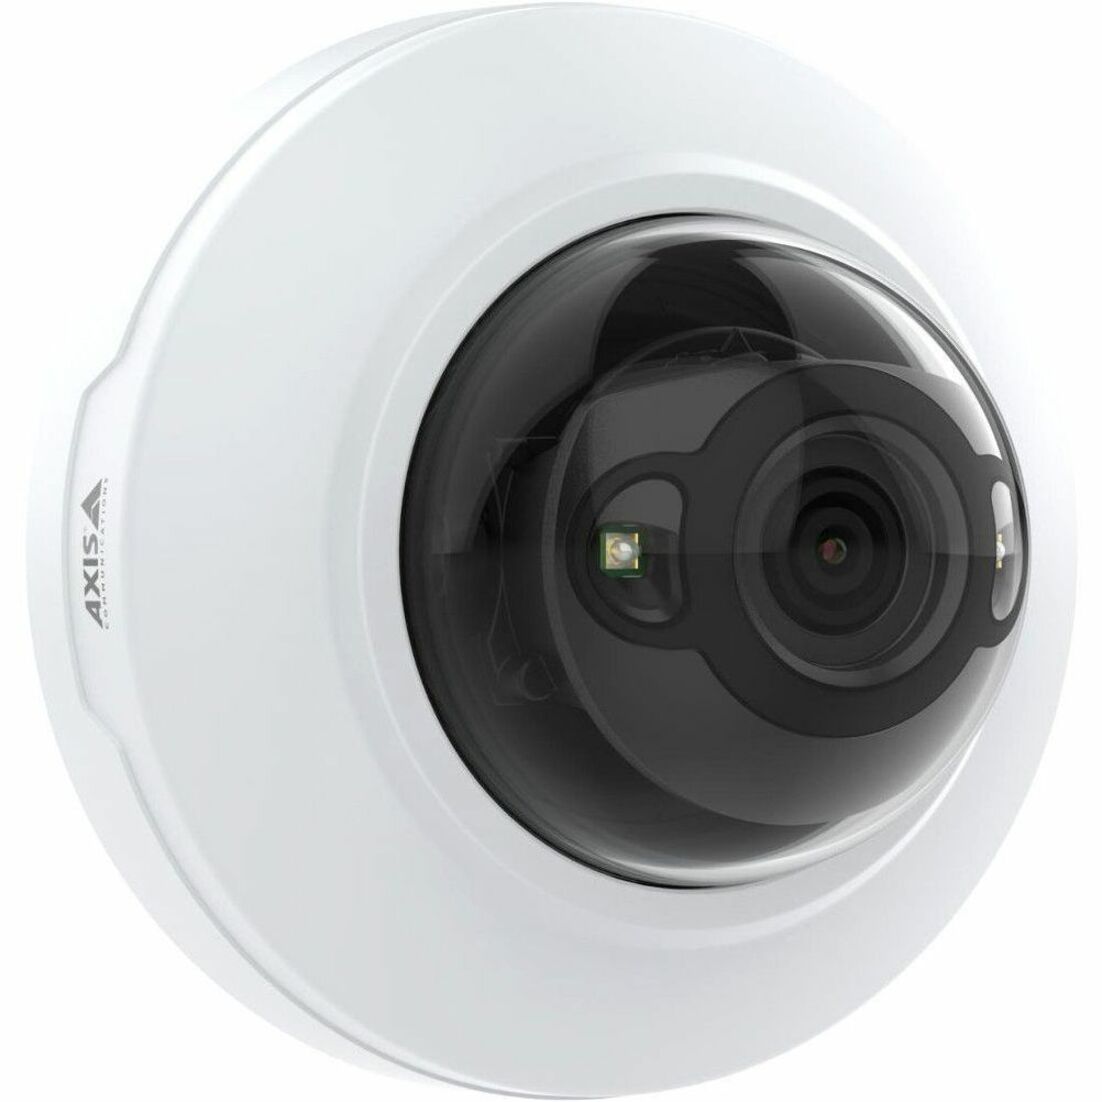 AXIS 02679-001 M4218-LV Dome Camera, 8 Megapixel 4K Network Camera, Color, Dome